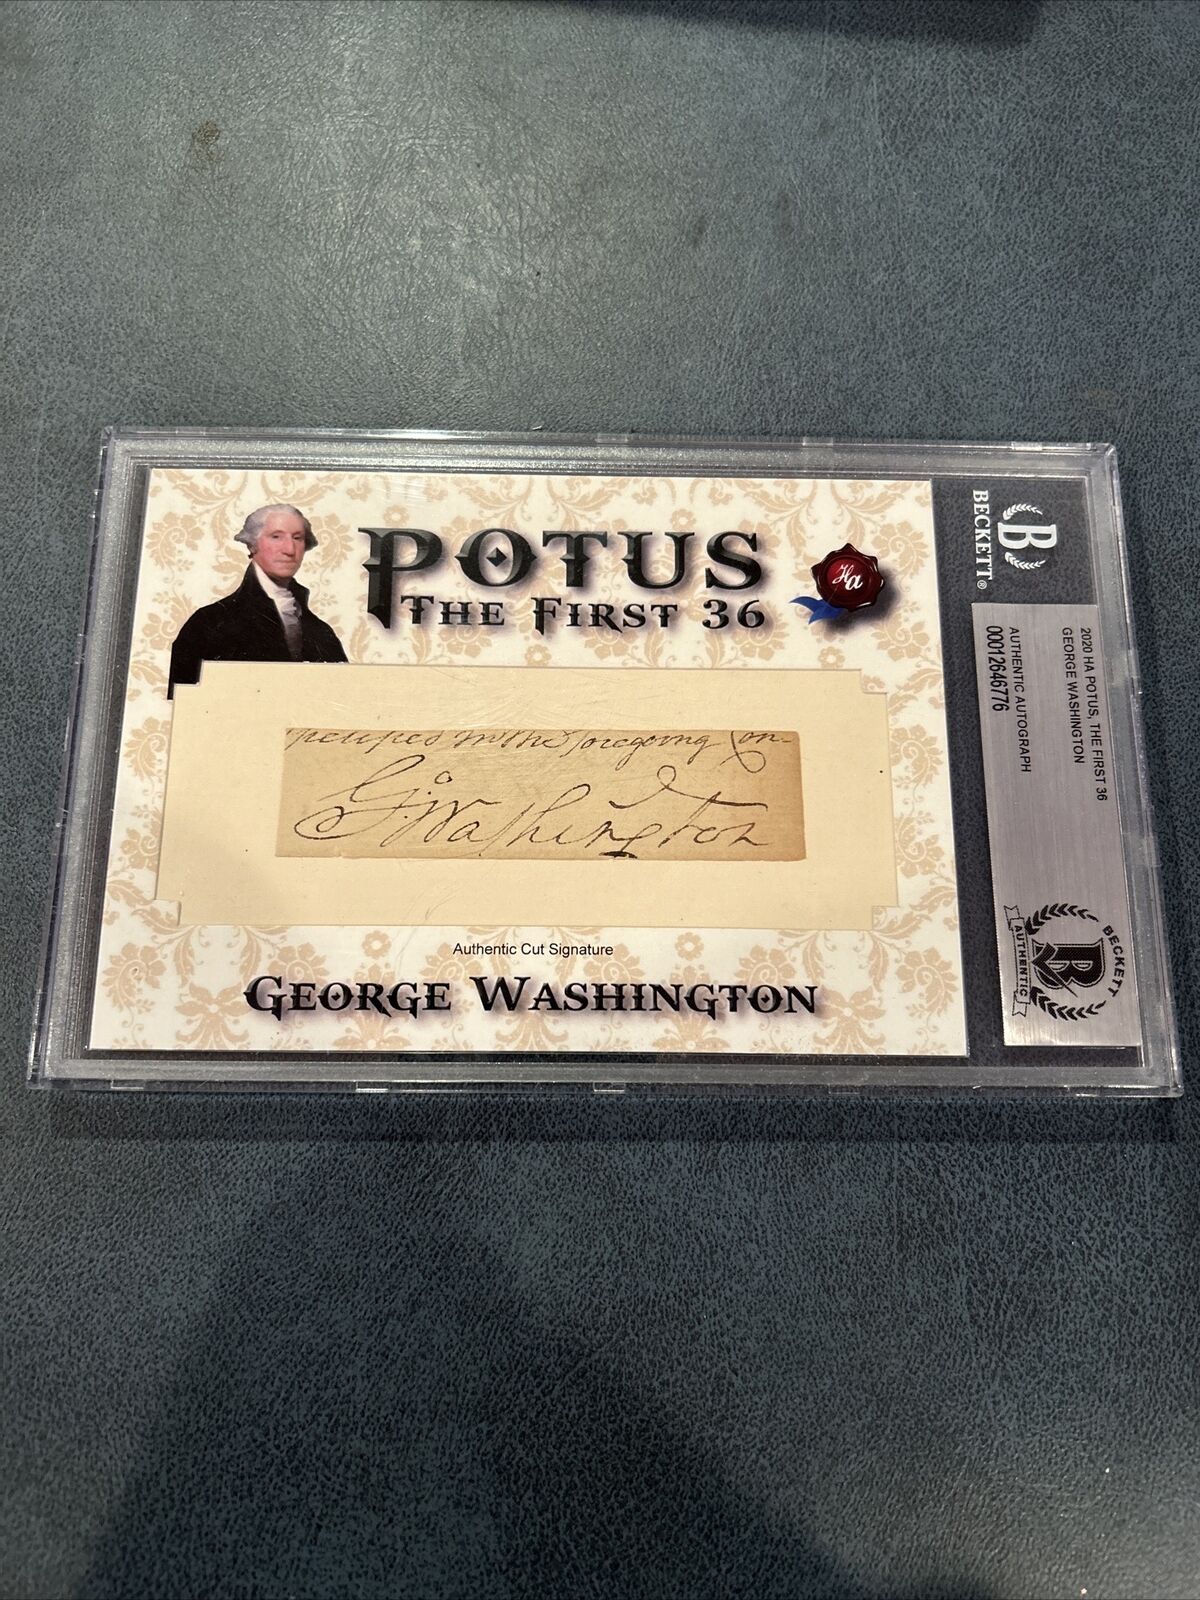 George Washington Authentic Cut Signature 2020 HA POTUS The First 36